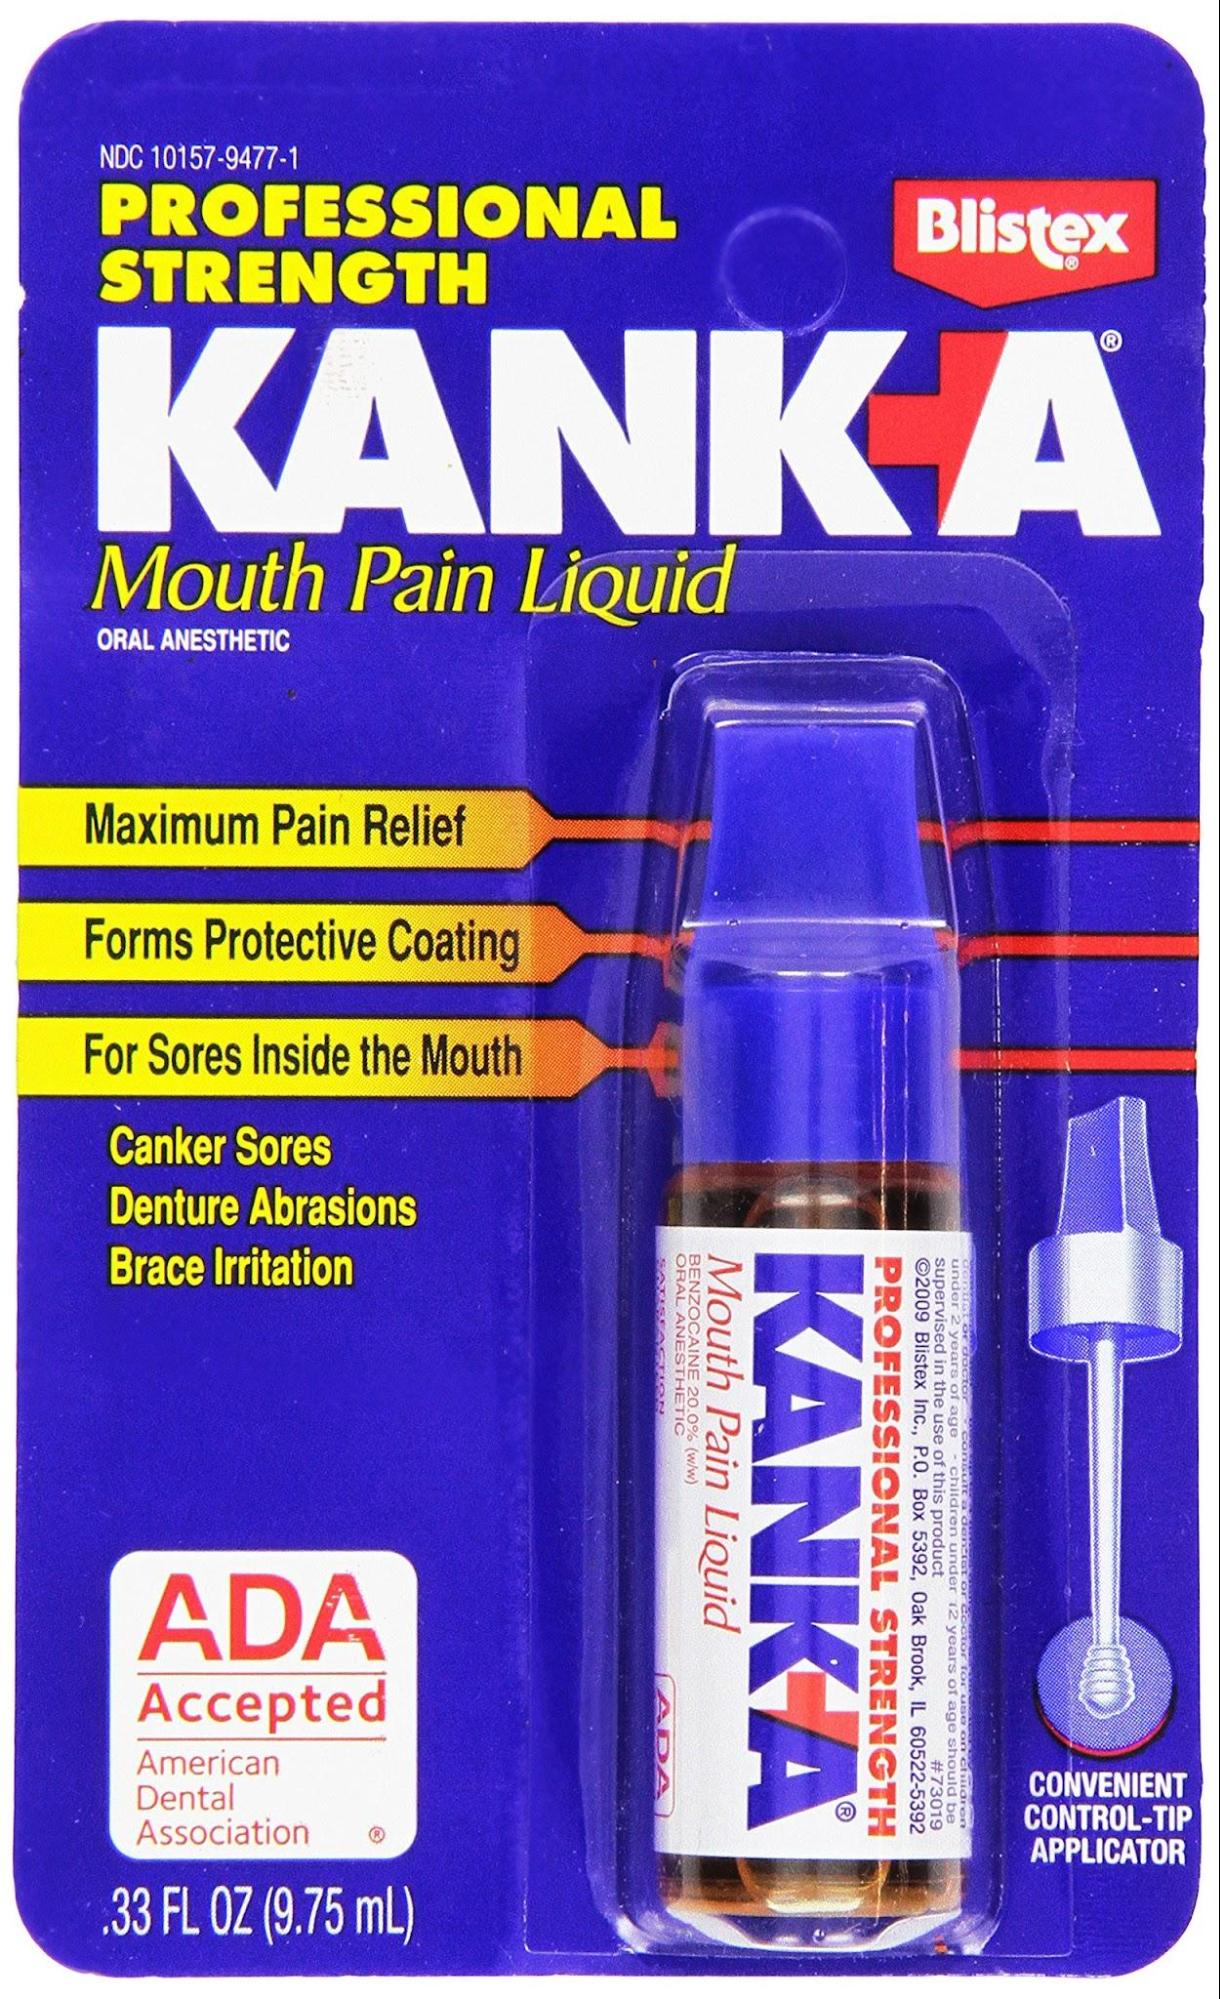 Kanka Mouth Pain Liquid.jpg